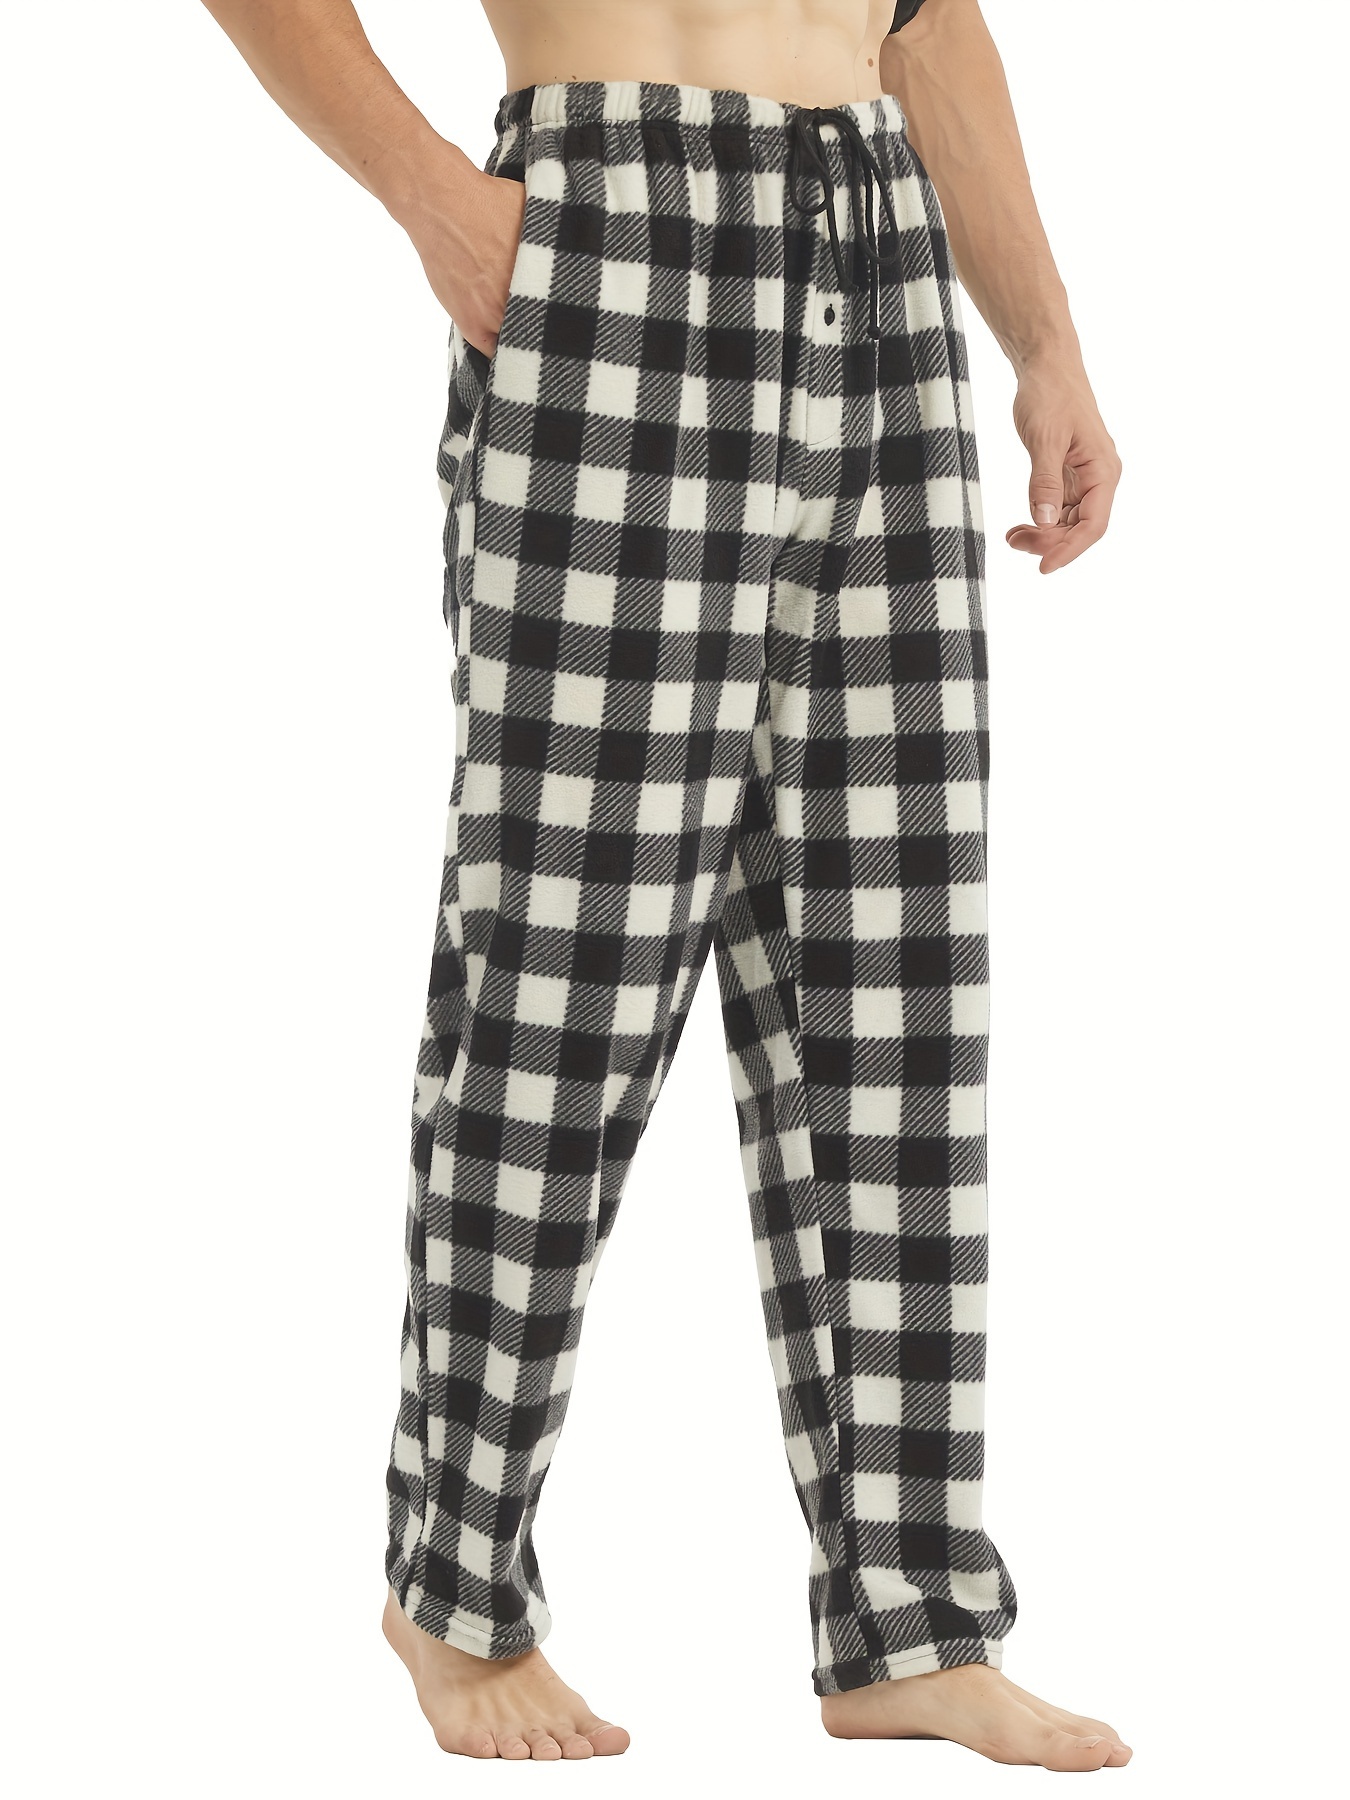 Mens Black and White Plaid Pajama Pants